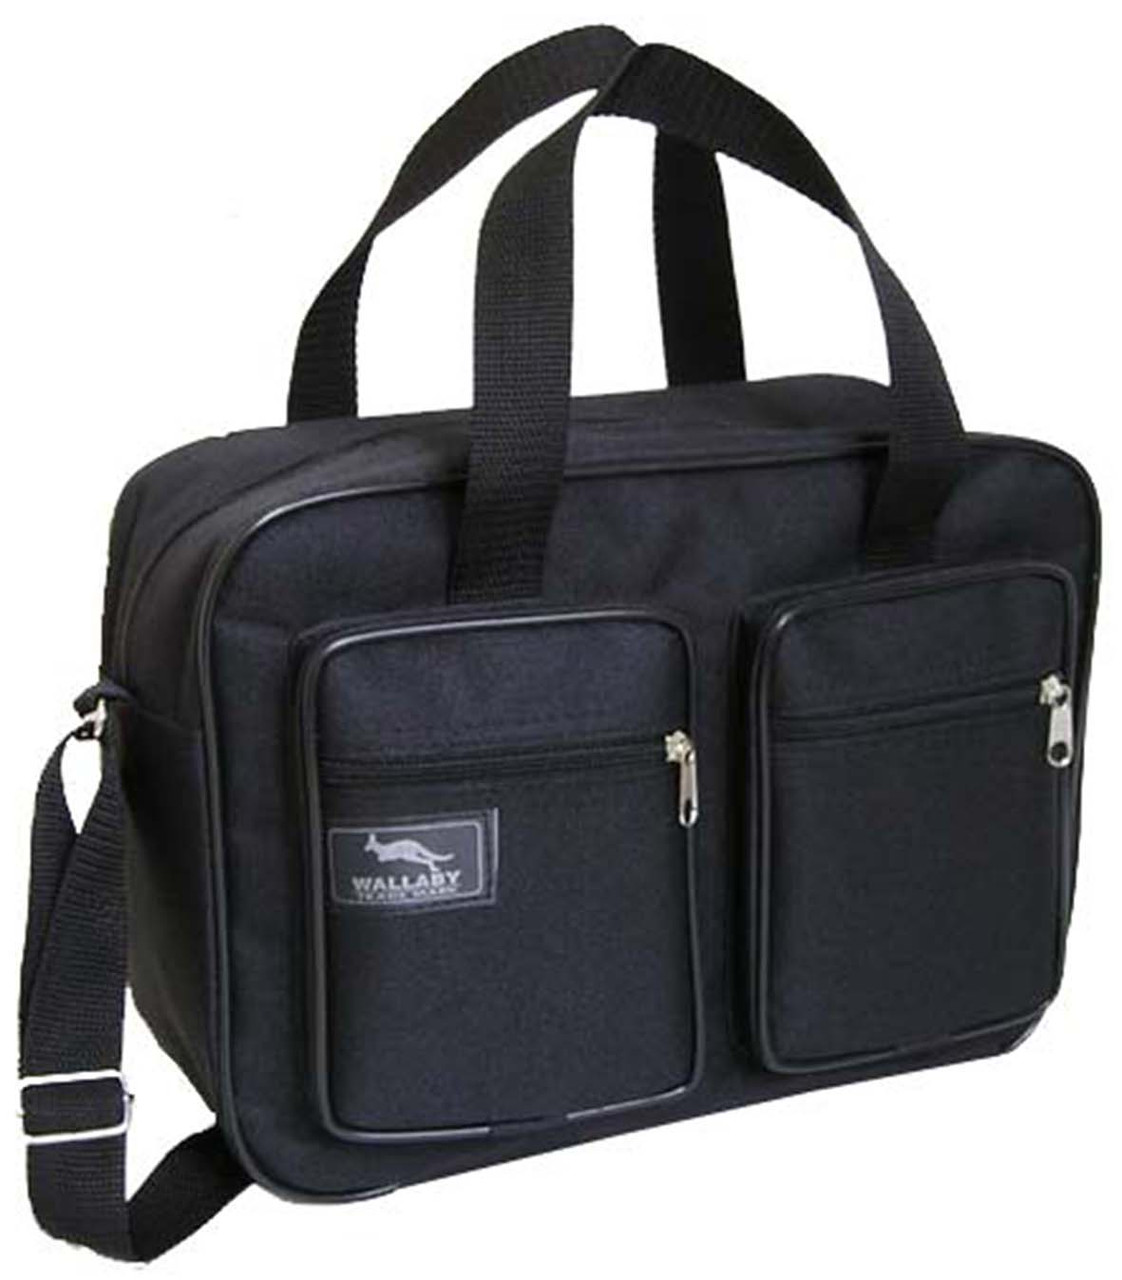 Чоловіча сумка esW2610 чорна барсетка через плече папка портфель А4 32х24х10см